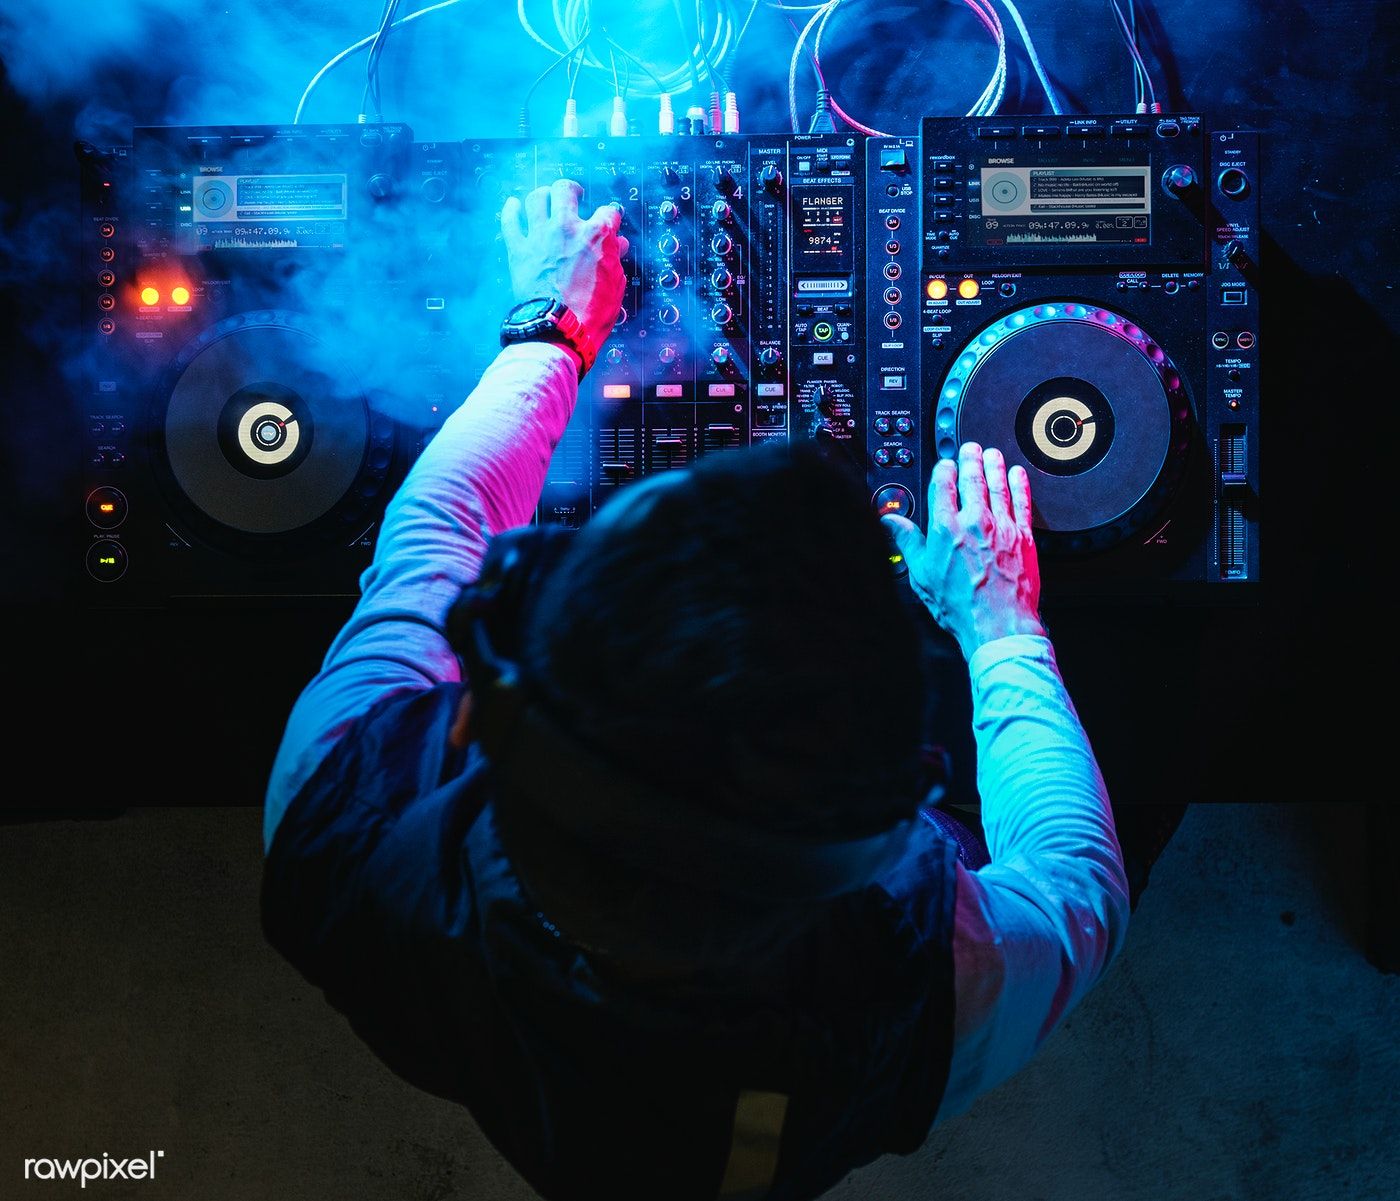 Download premium image of DJ is on a mixer station about dj, mixer, audio, buttons, and clubbing 51850. Dj photo, Dj setup, Dj